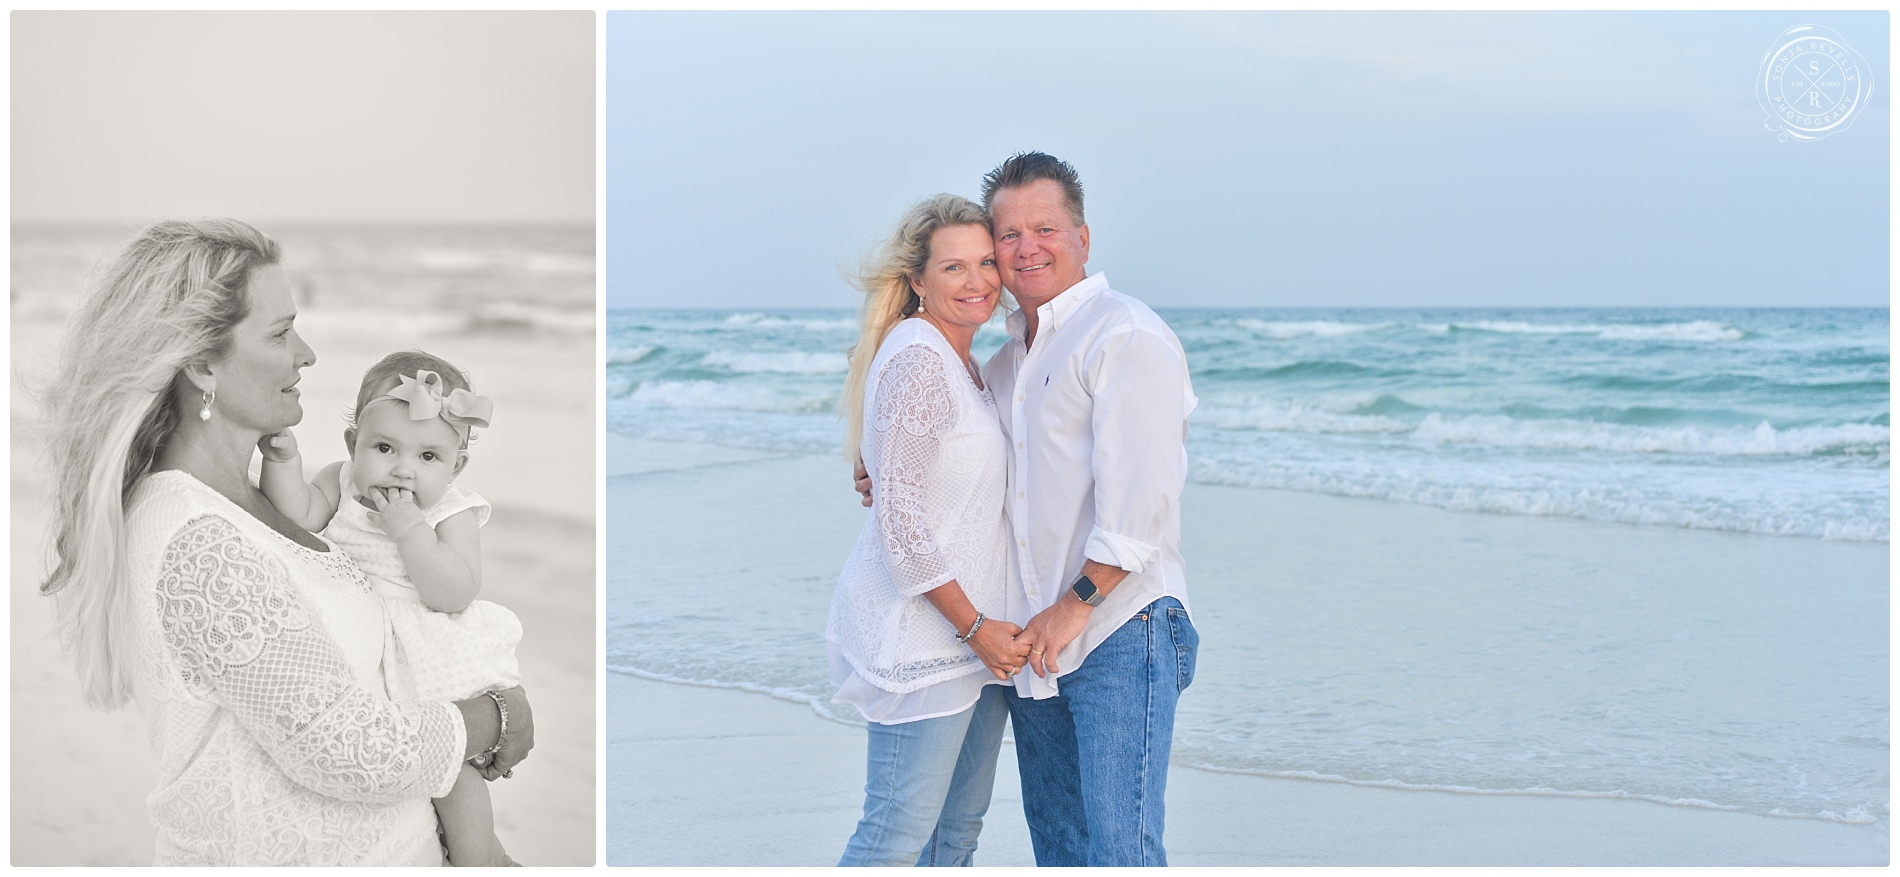 Beach Family Portrait Photographer,Wedding Photography,